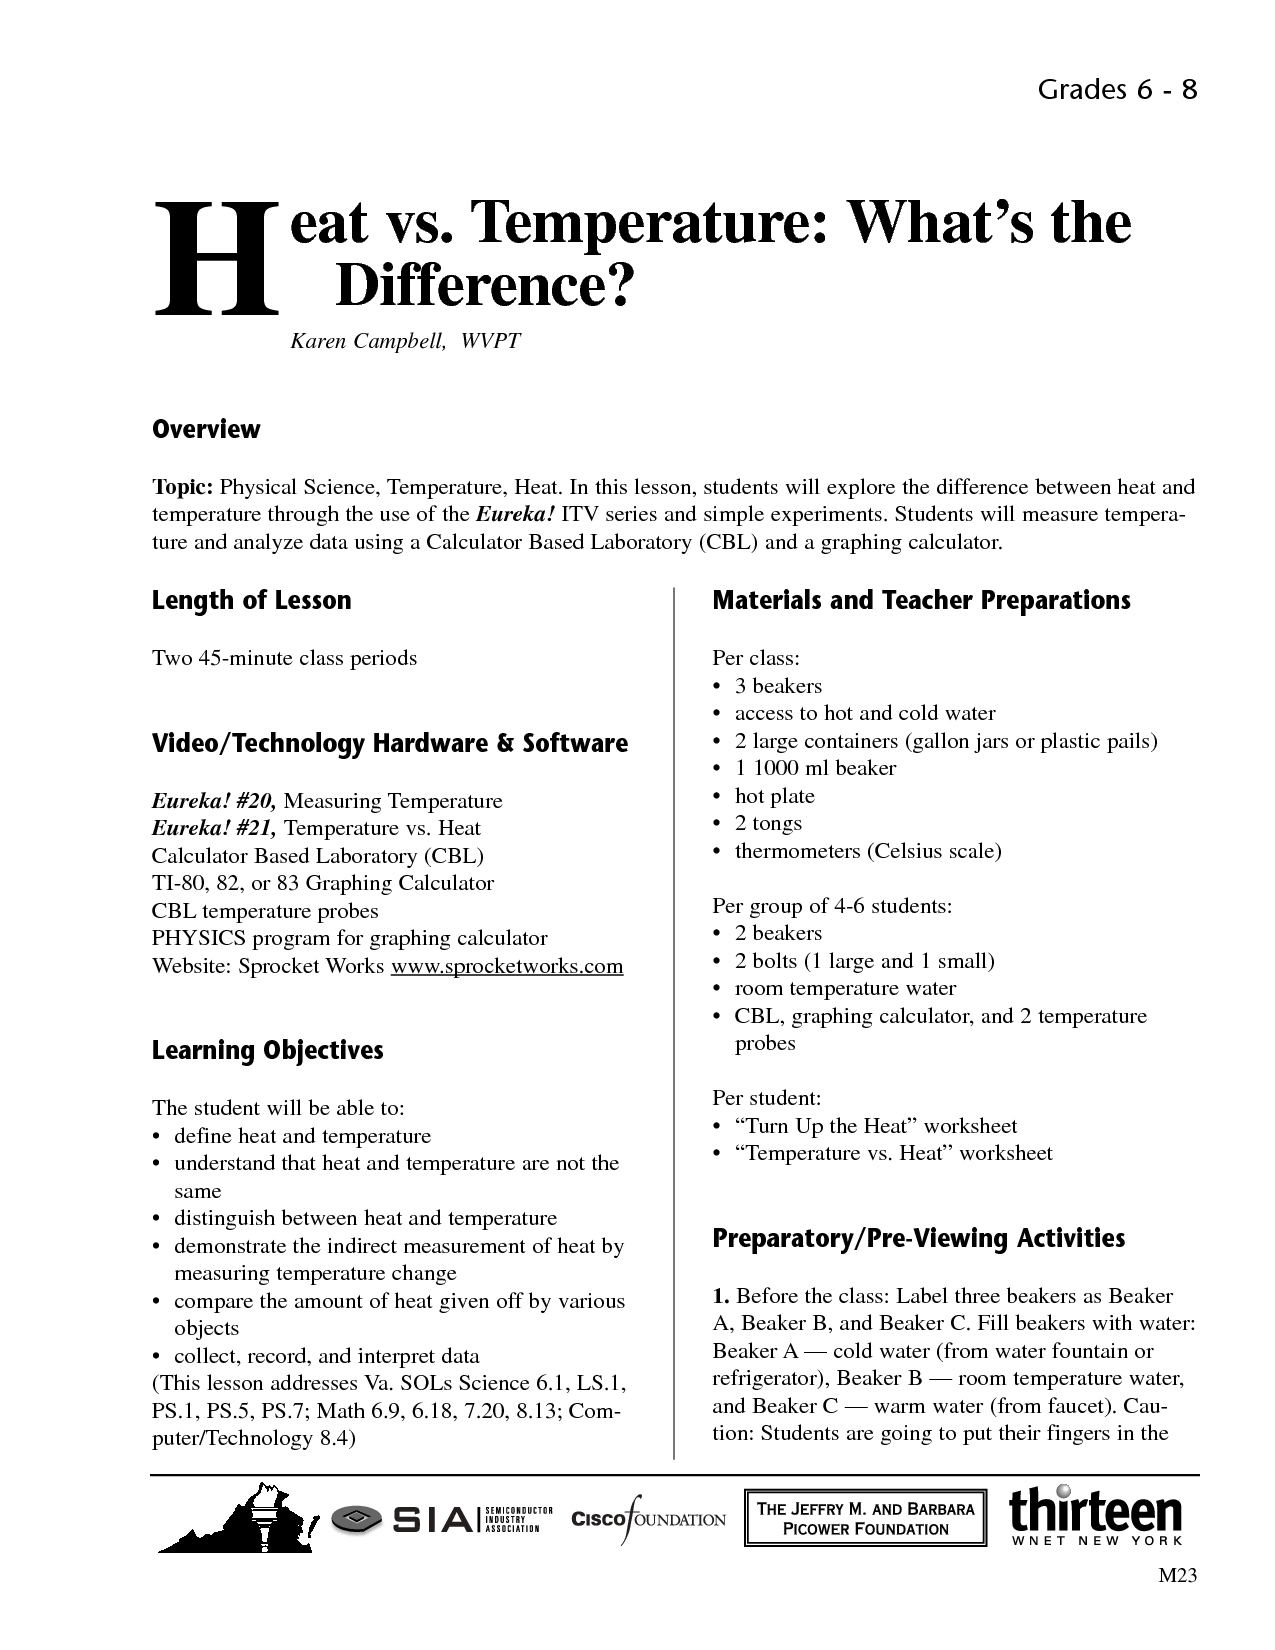 Measuring Temperature Worksheets Image